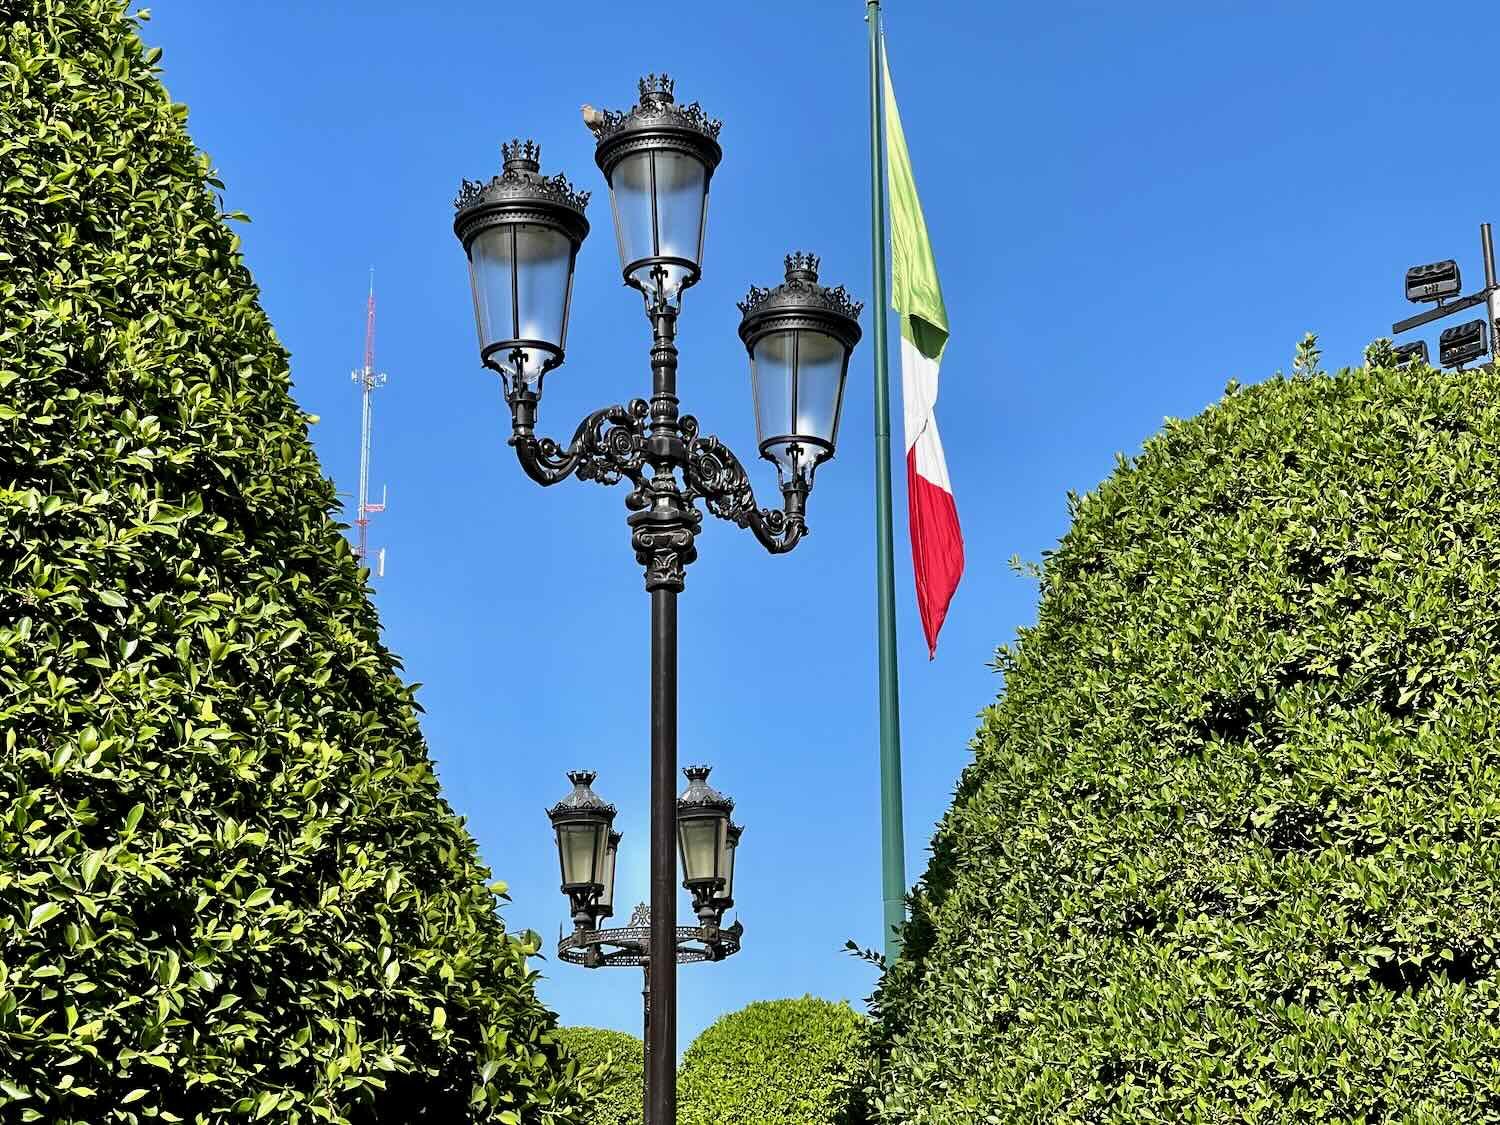 The Mexican Flag flies over the Plaza Principál